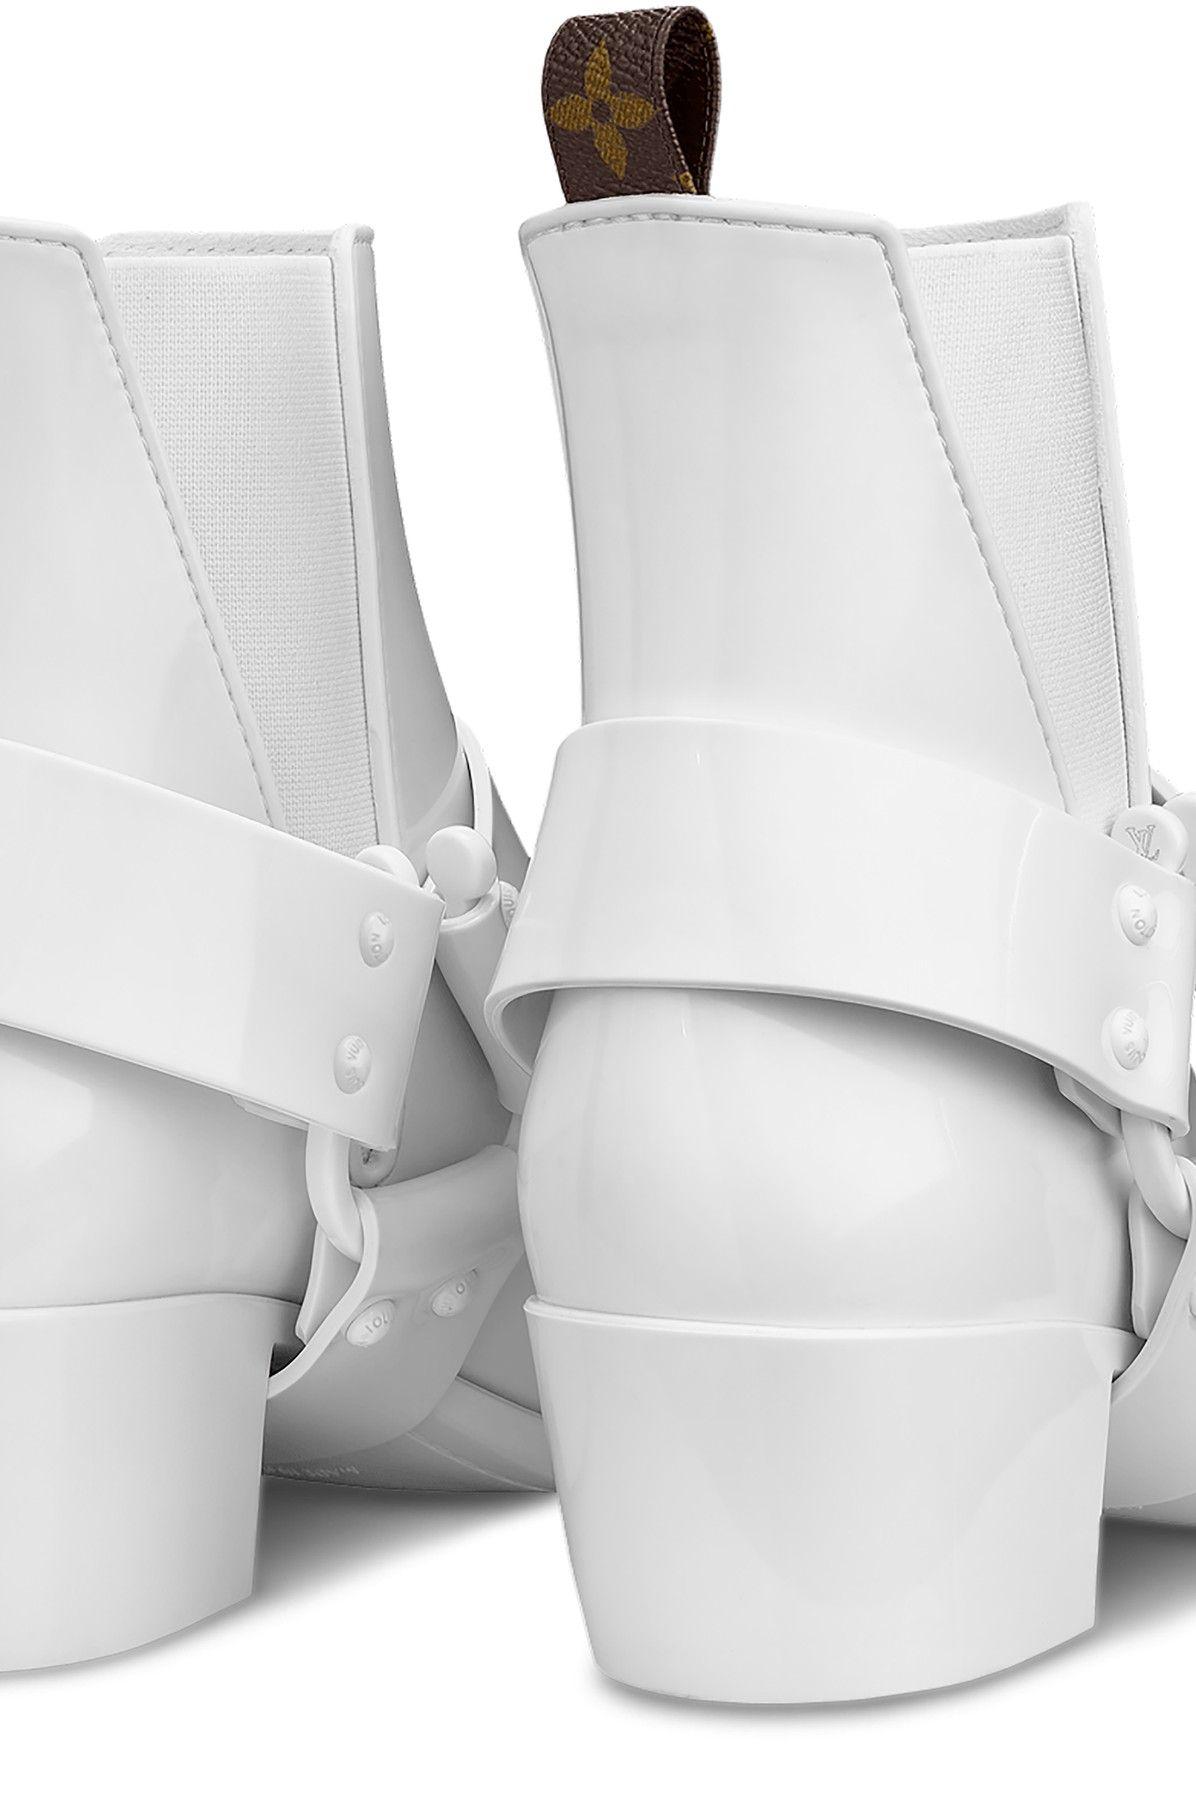 Louis Vuitton Rhapsody Ankle Boots